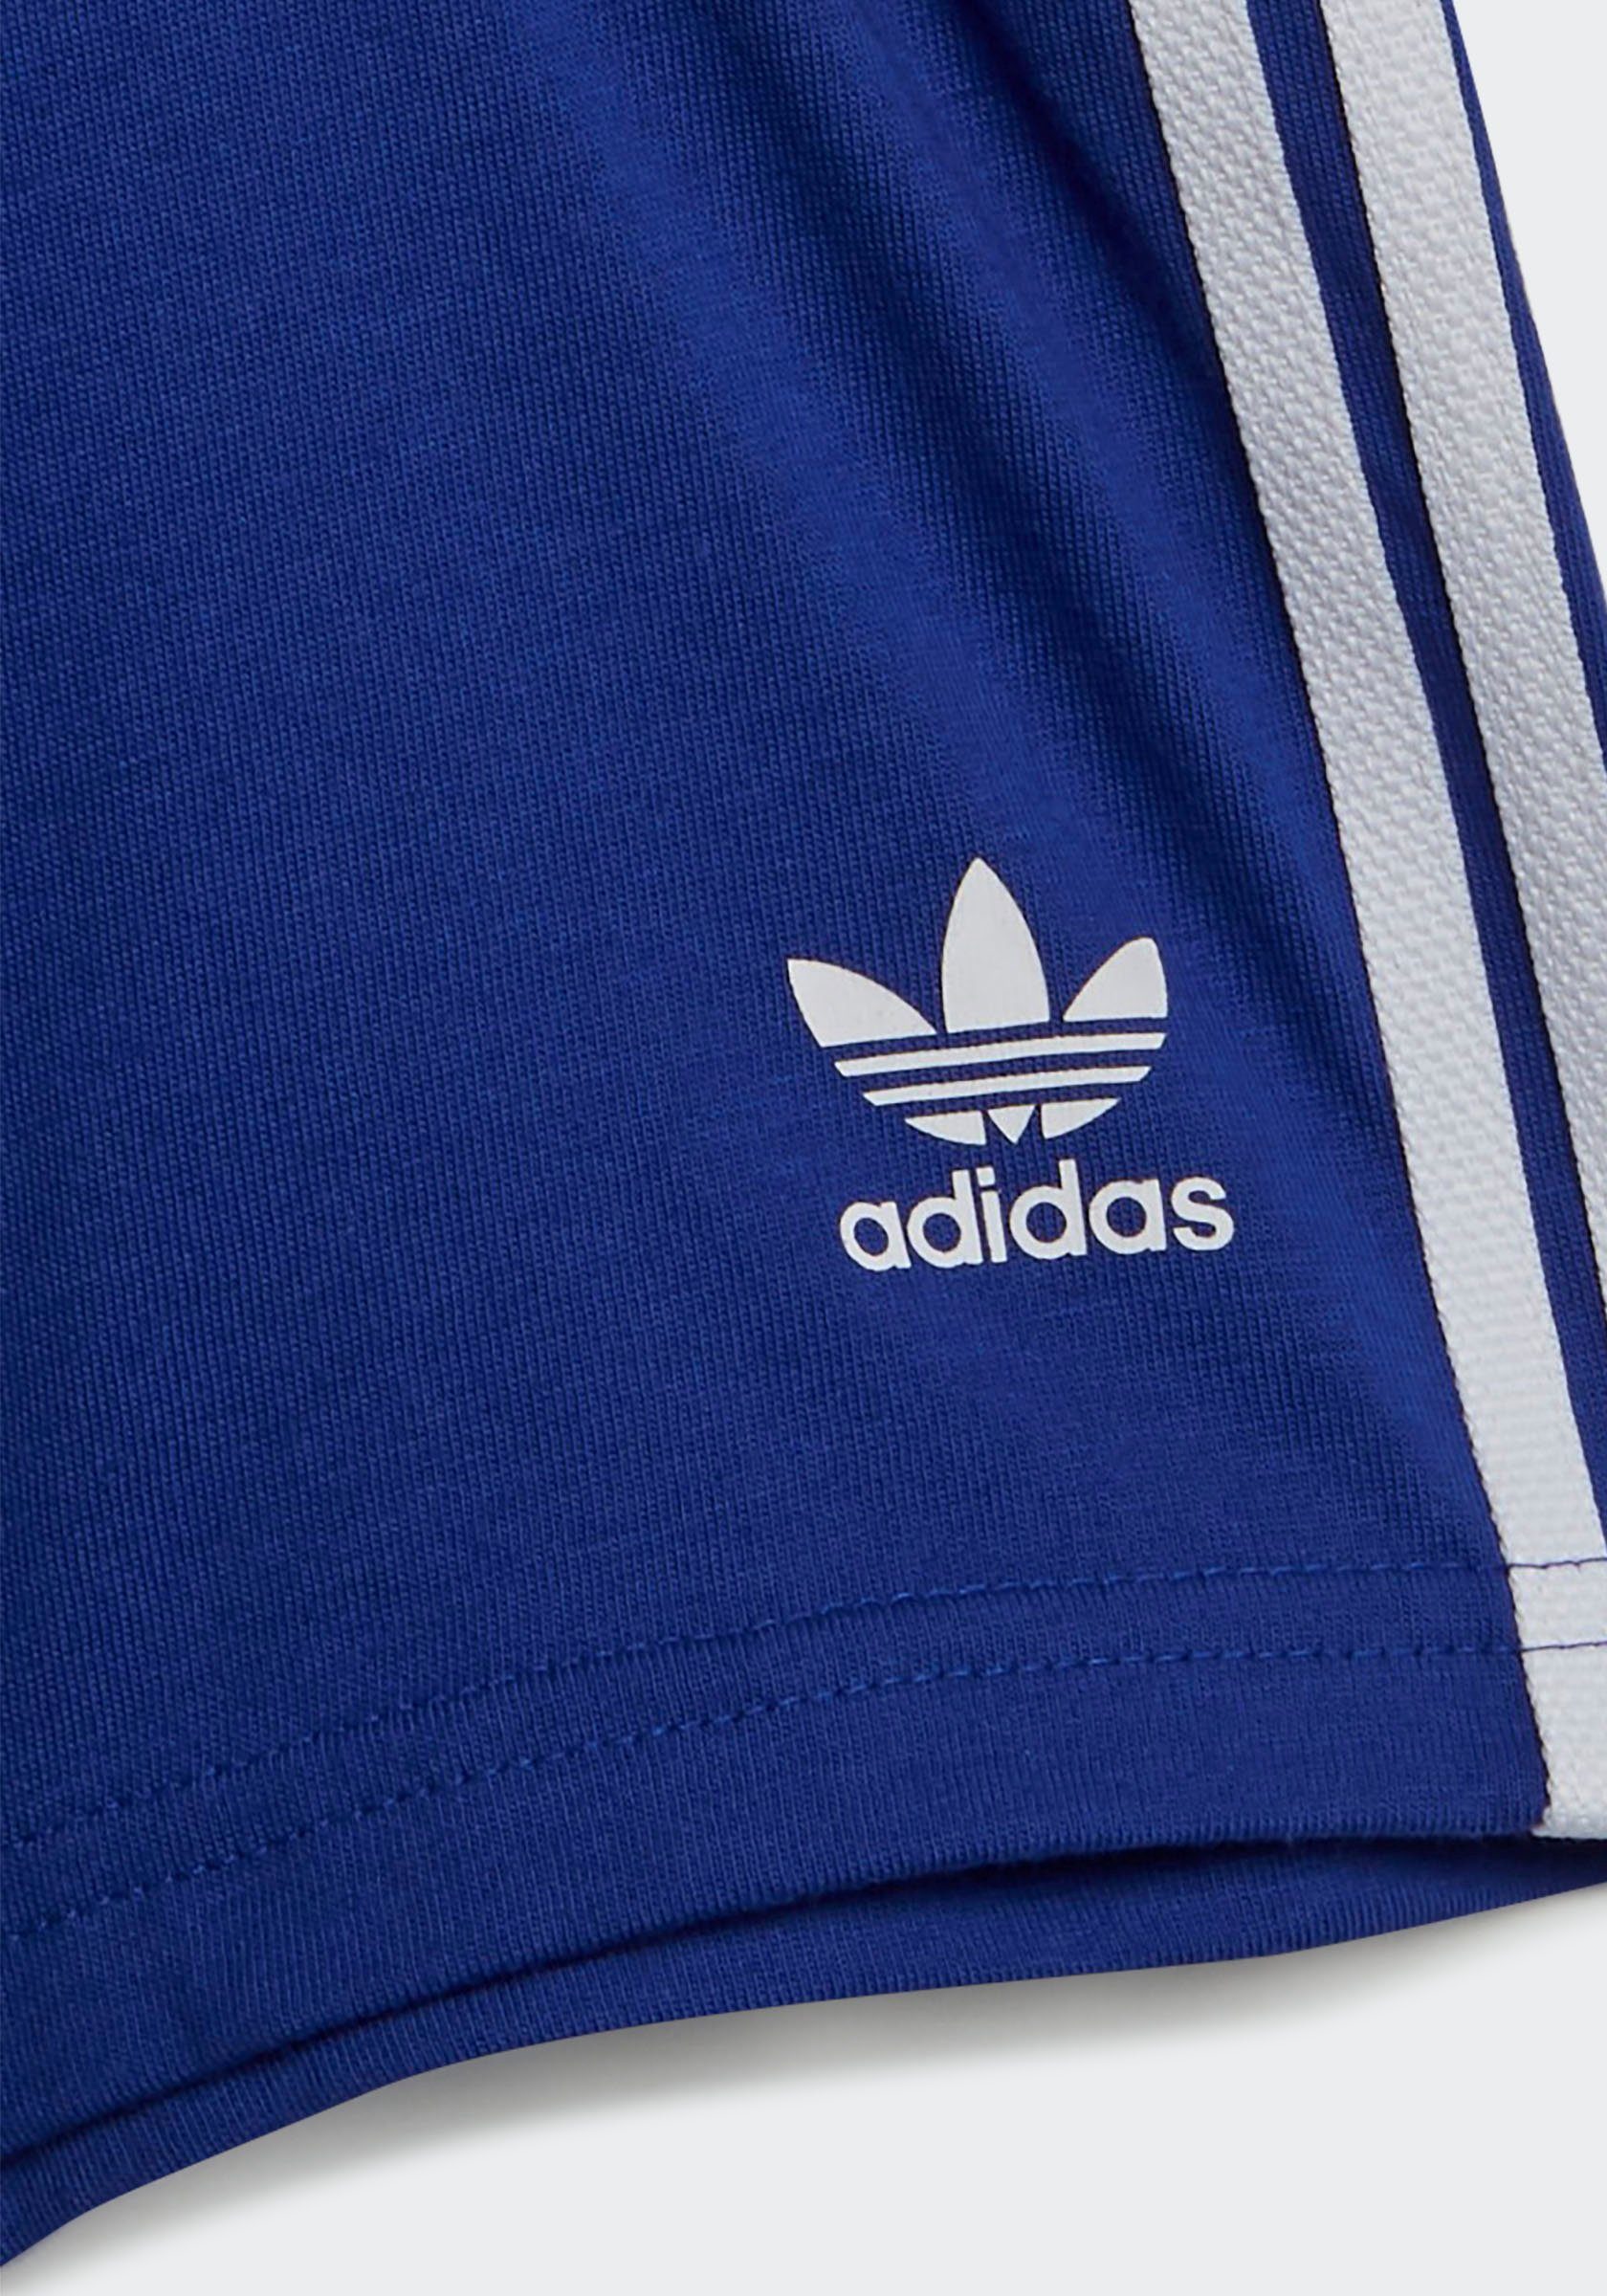 adidas Originals T-Shirt & (Set) Lucid UND Blue Semi SHORTS TREFOIL Shorts SET